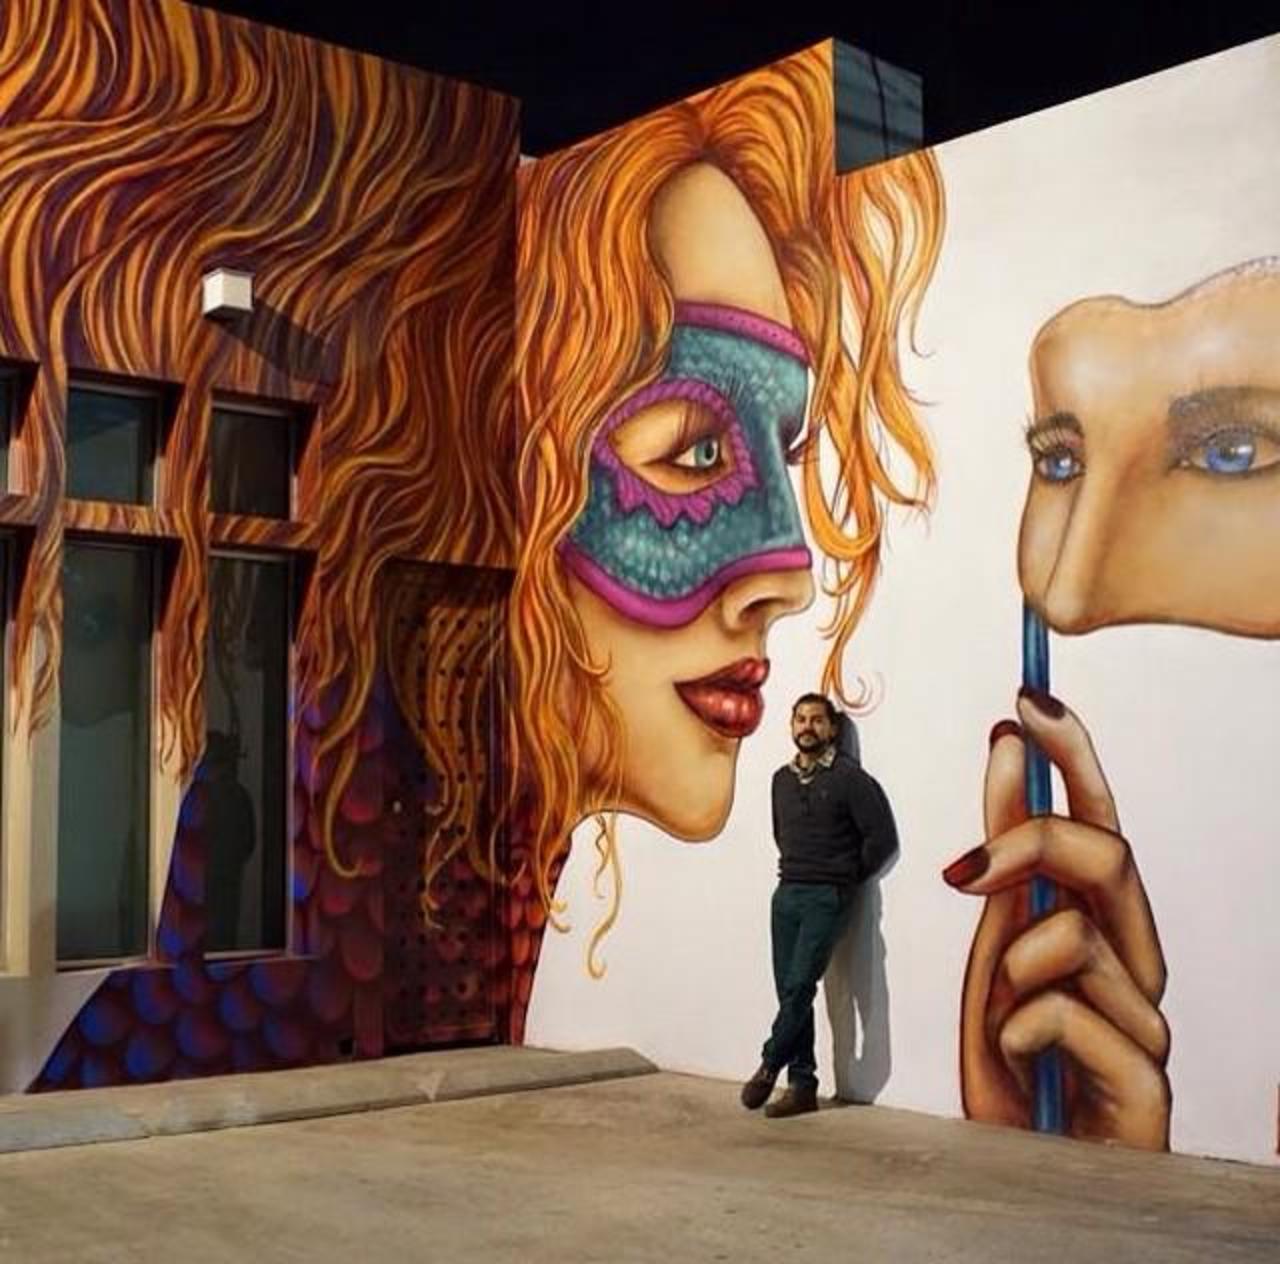 “@GoogleStreetArt: Wonderful Street Art work by Libre Hem in Tijuana, Mexico 

#art #graffiti #mural #streetart http://t.co/vvbI2Xkn3X”